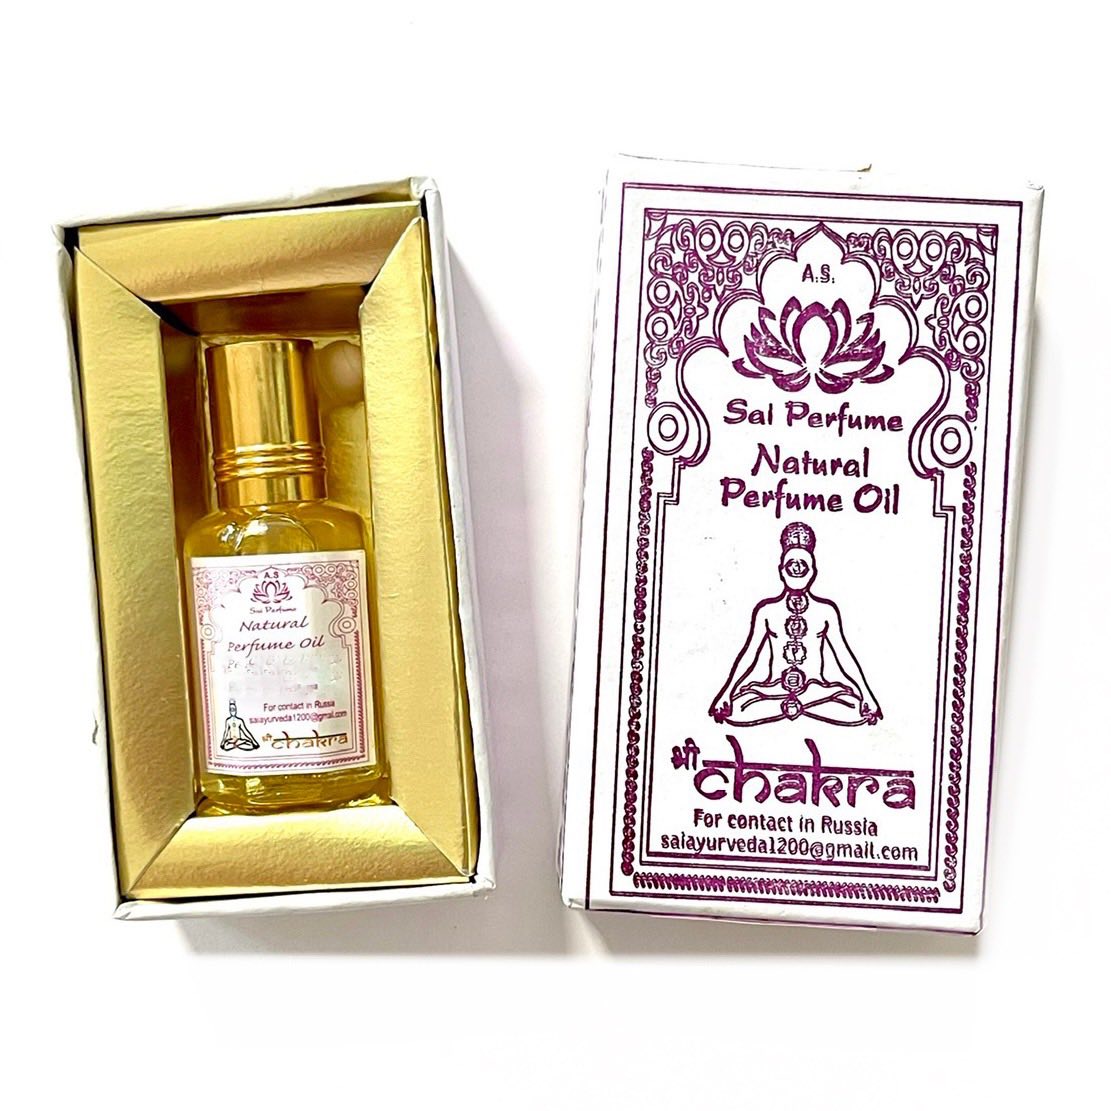 Sai Perfume Natural Oil KAMA SUTRA, Shri Chakra (Натуральное парфюмерное масло КАМА СУТРА, Шри Чакра), коробка, 8 мл.